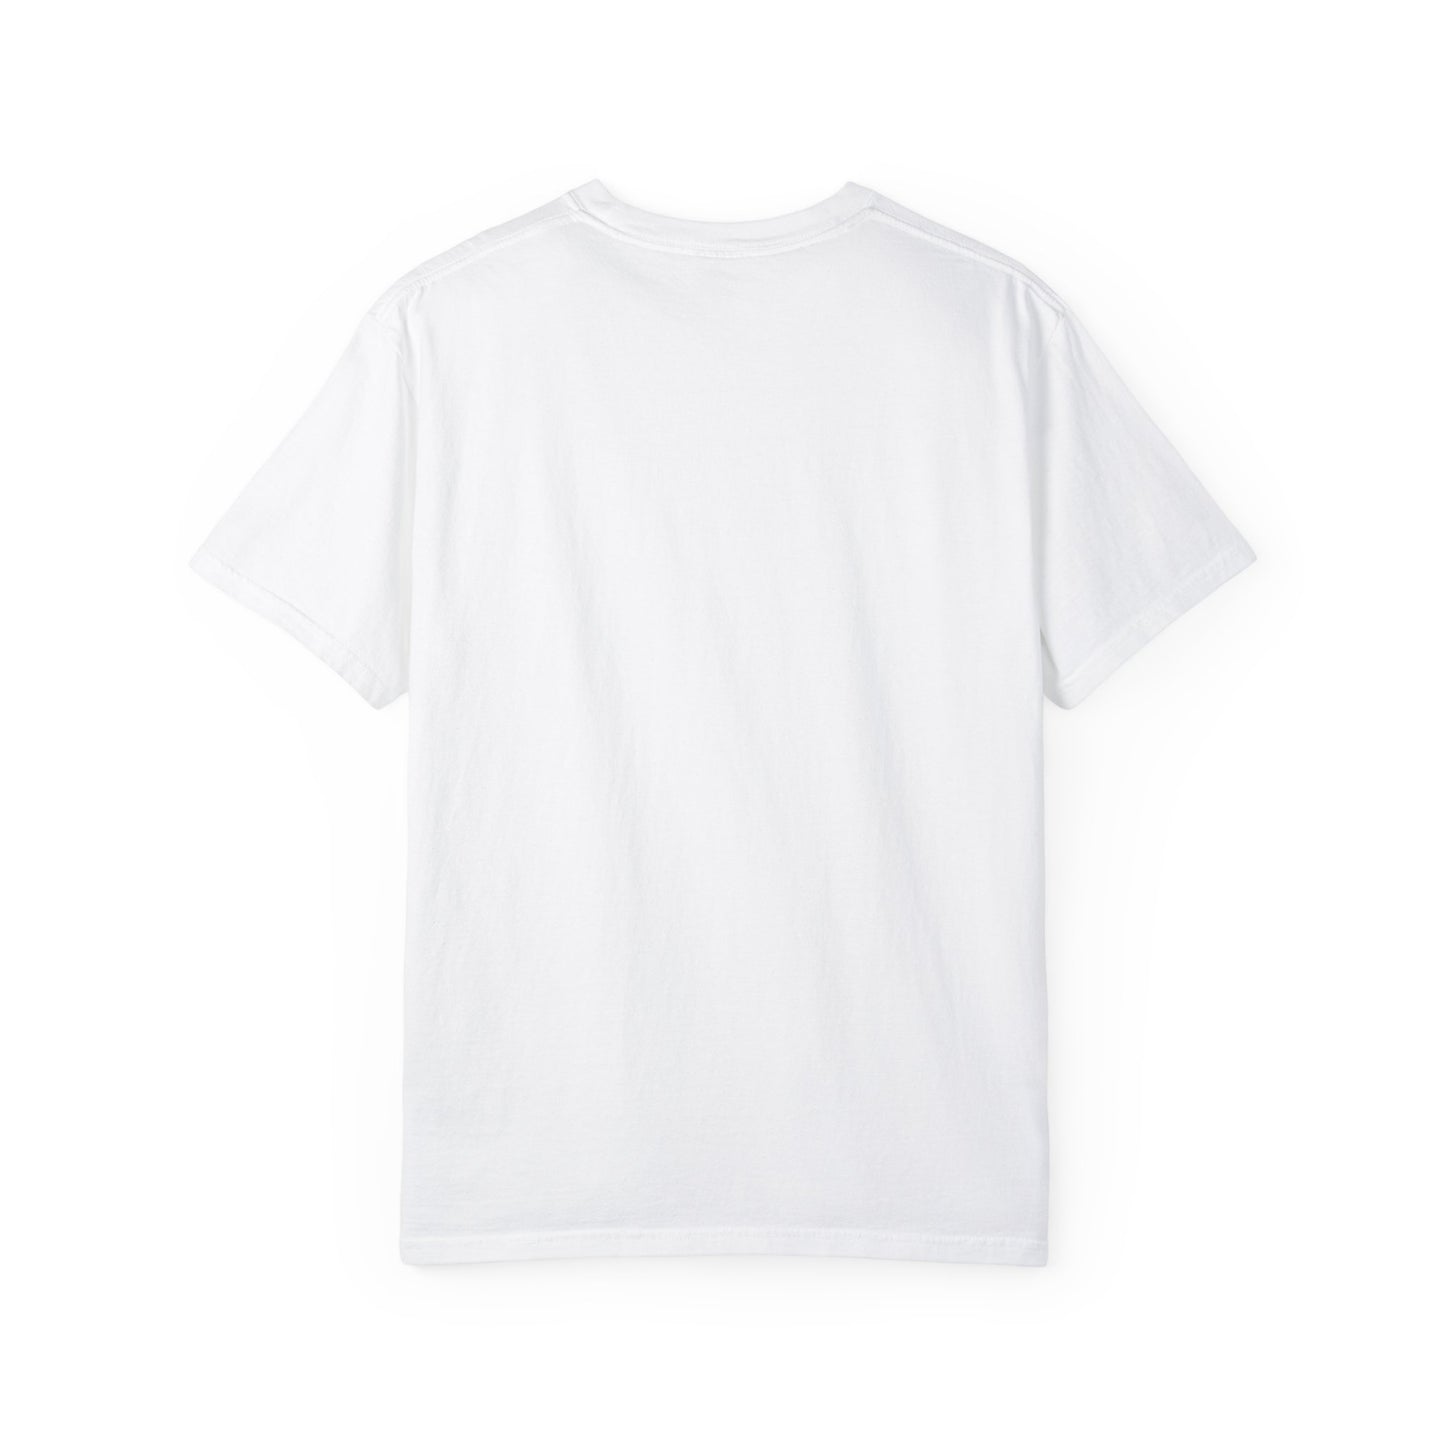 Cabbage & Tyler T-shirt White